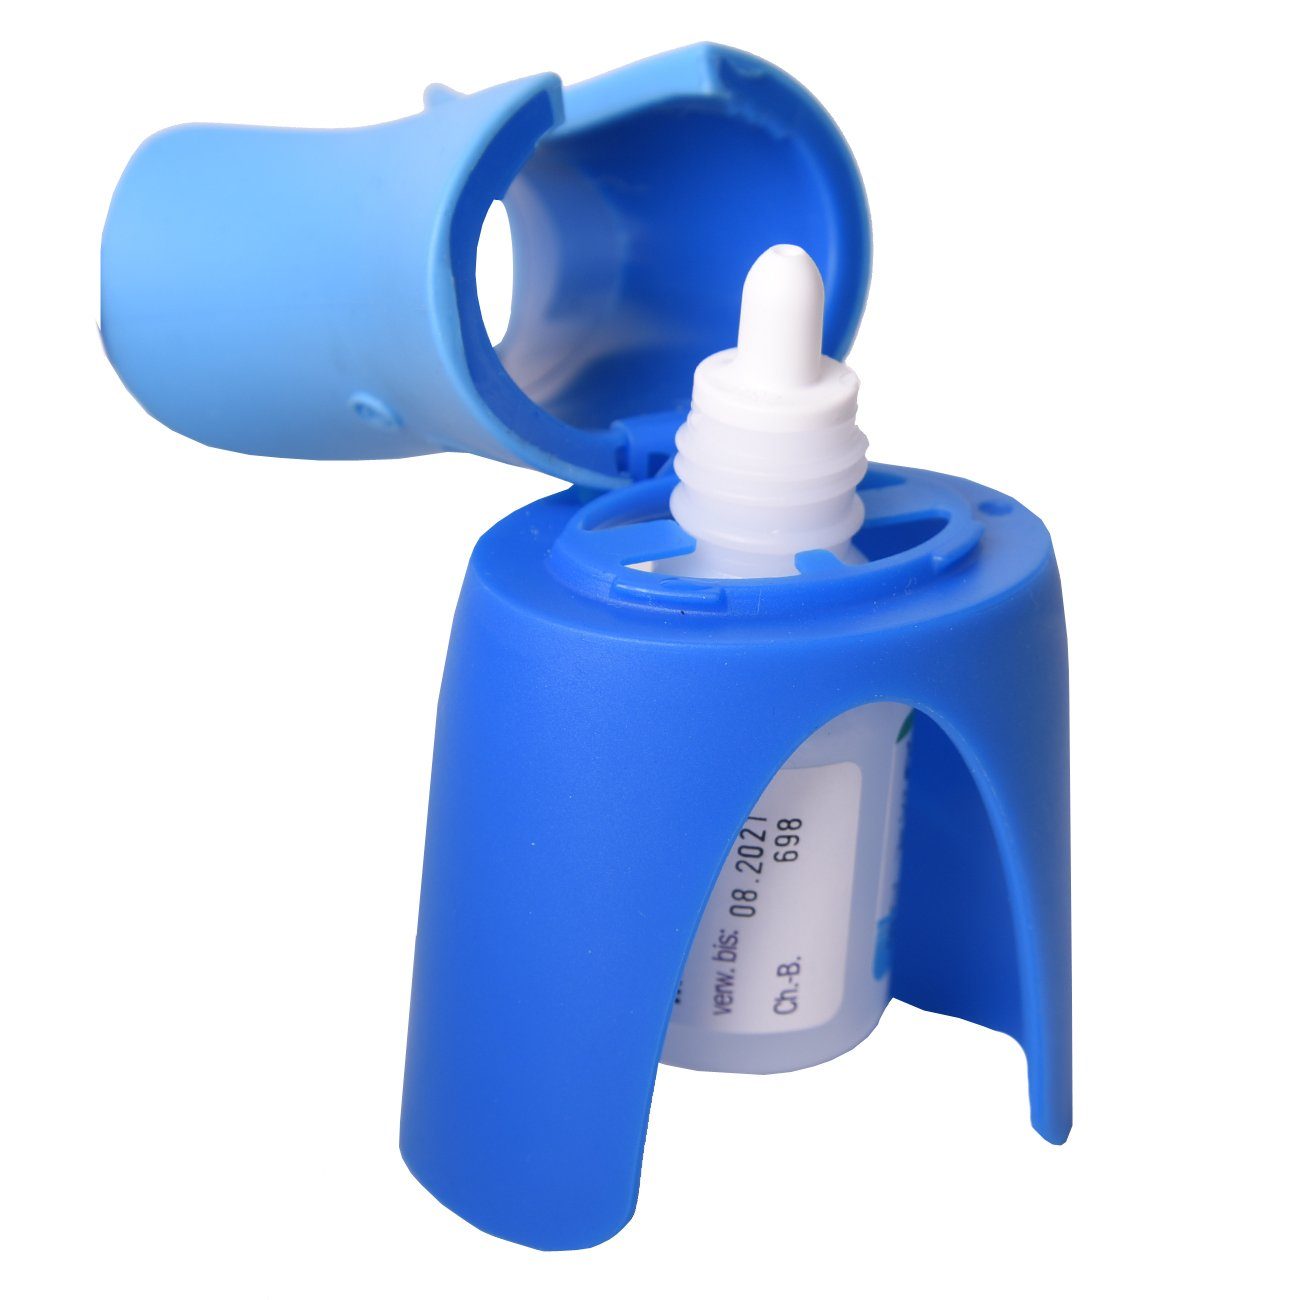 Remedic Augenpflege-Set Blau Premium Applikationshelfer Augentropfen-Hilfe